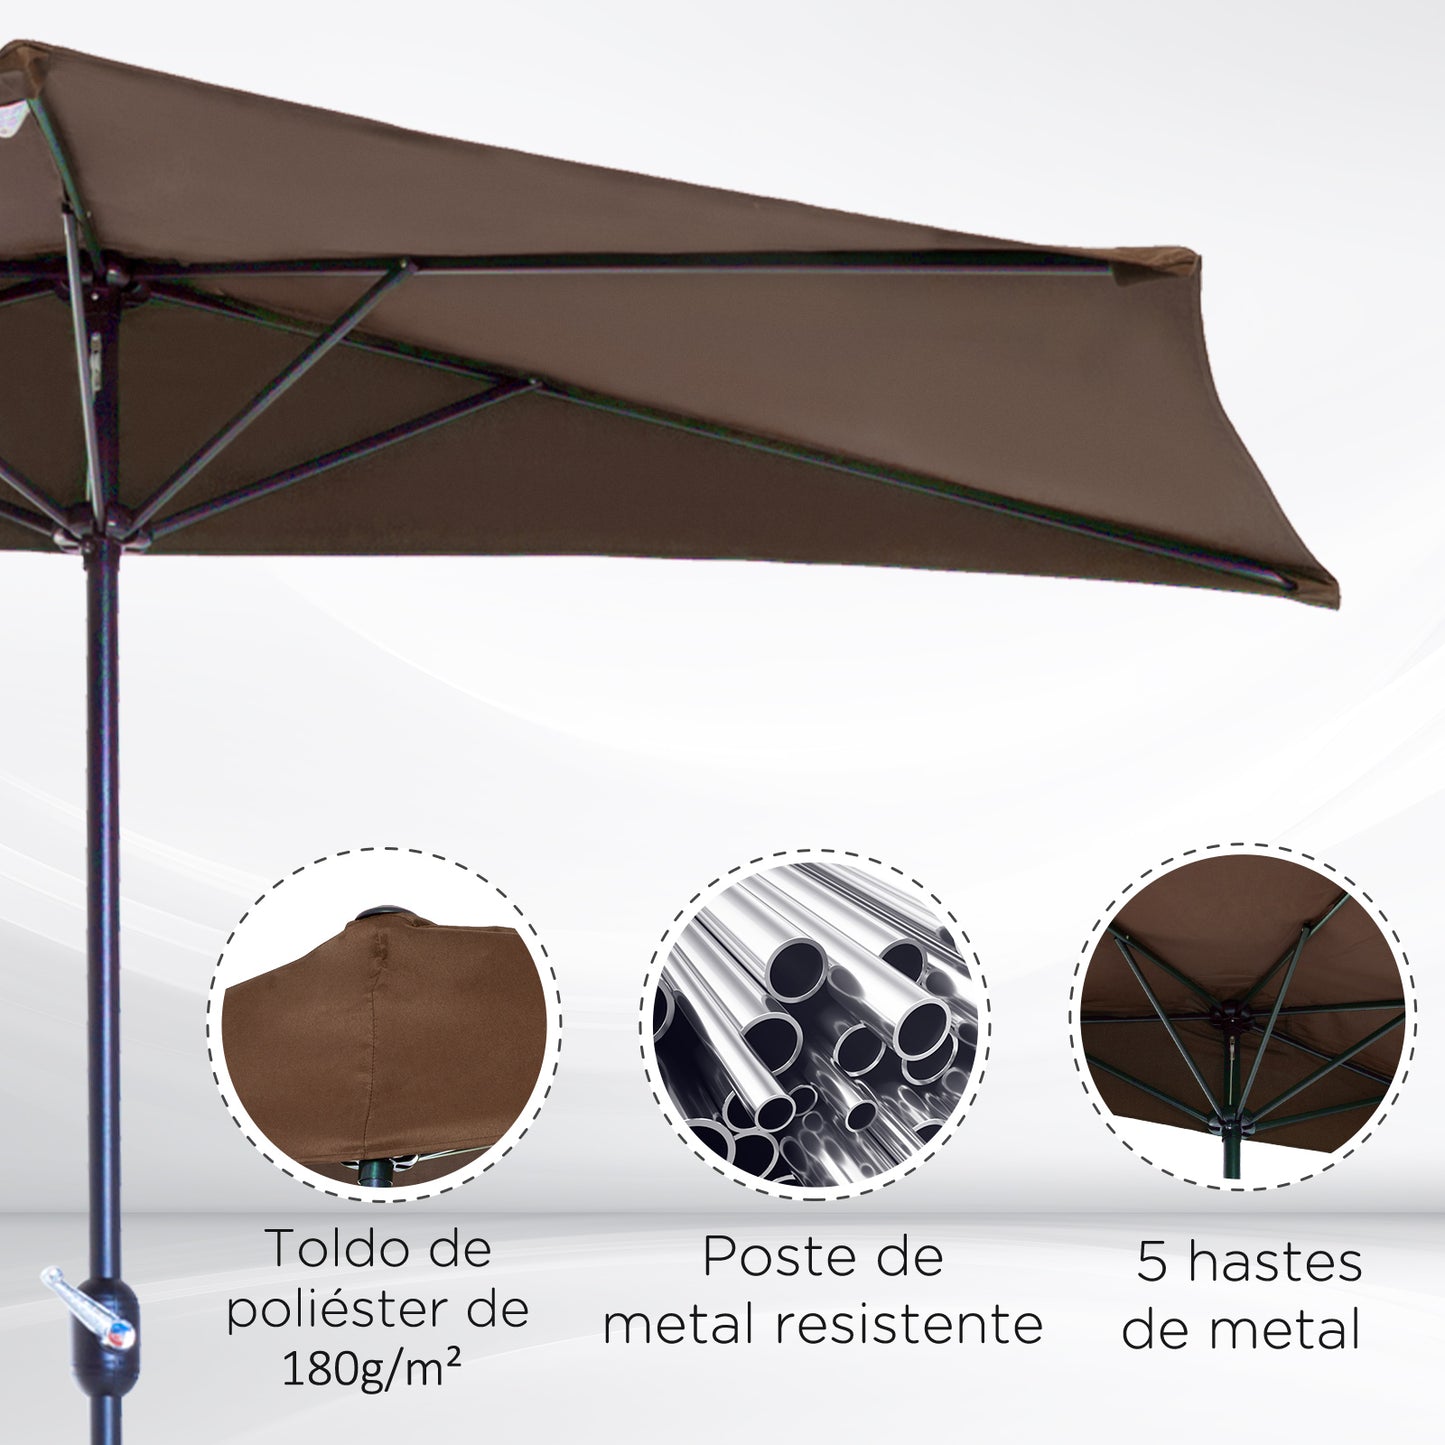 Outsunny 2.7m Balcony Half Parasol Garden Outdoor Umbrella 5 Steel Ribs - Brown